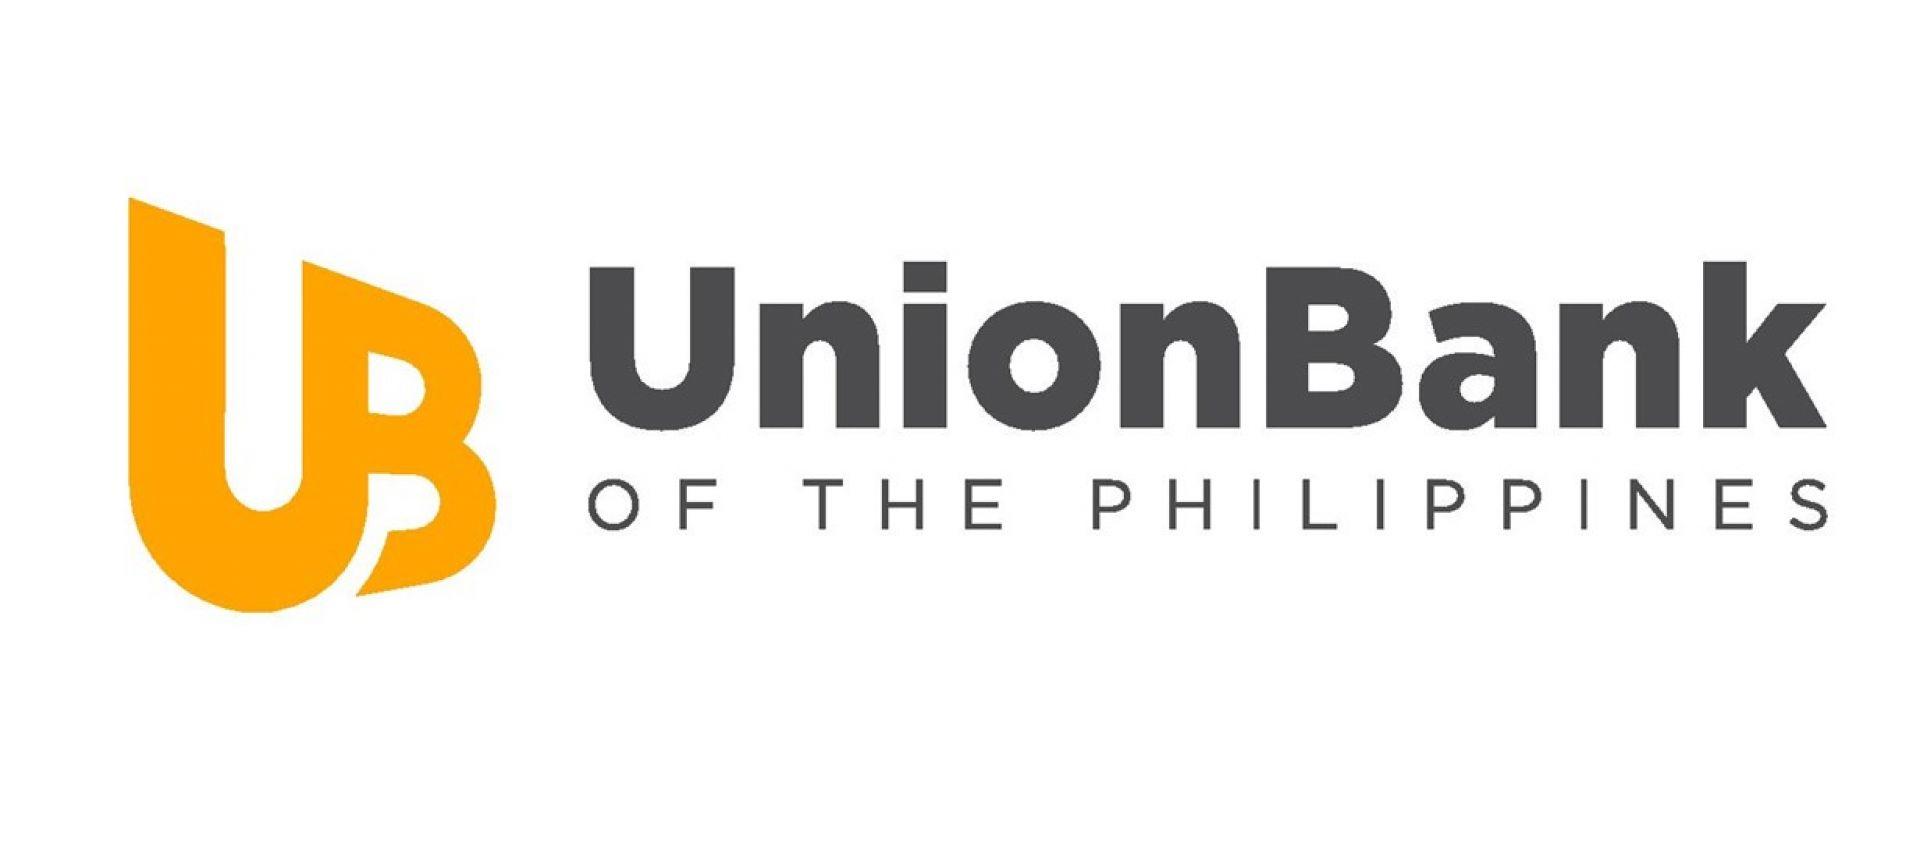 Union Bank Logo - Digital Asset Custody Operations ...